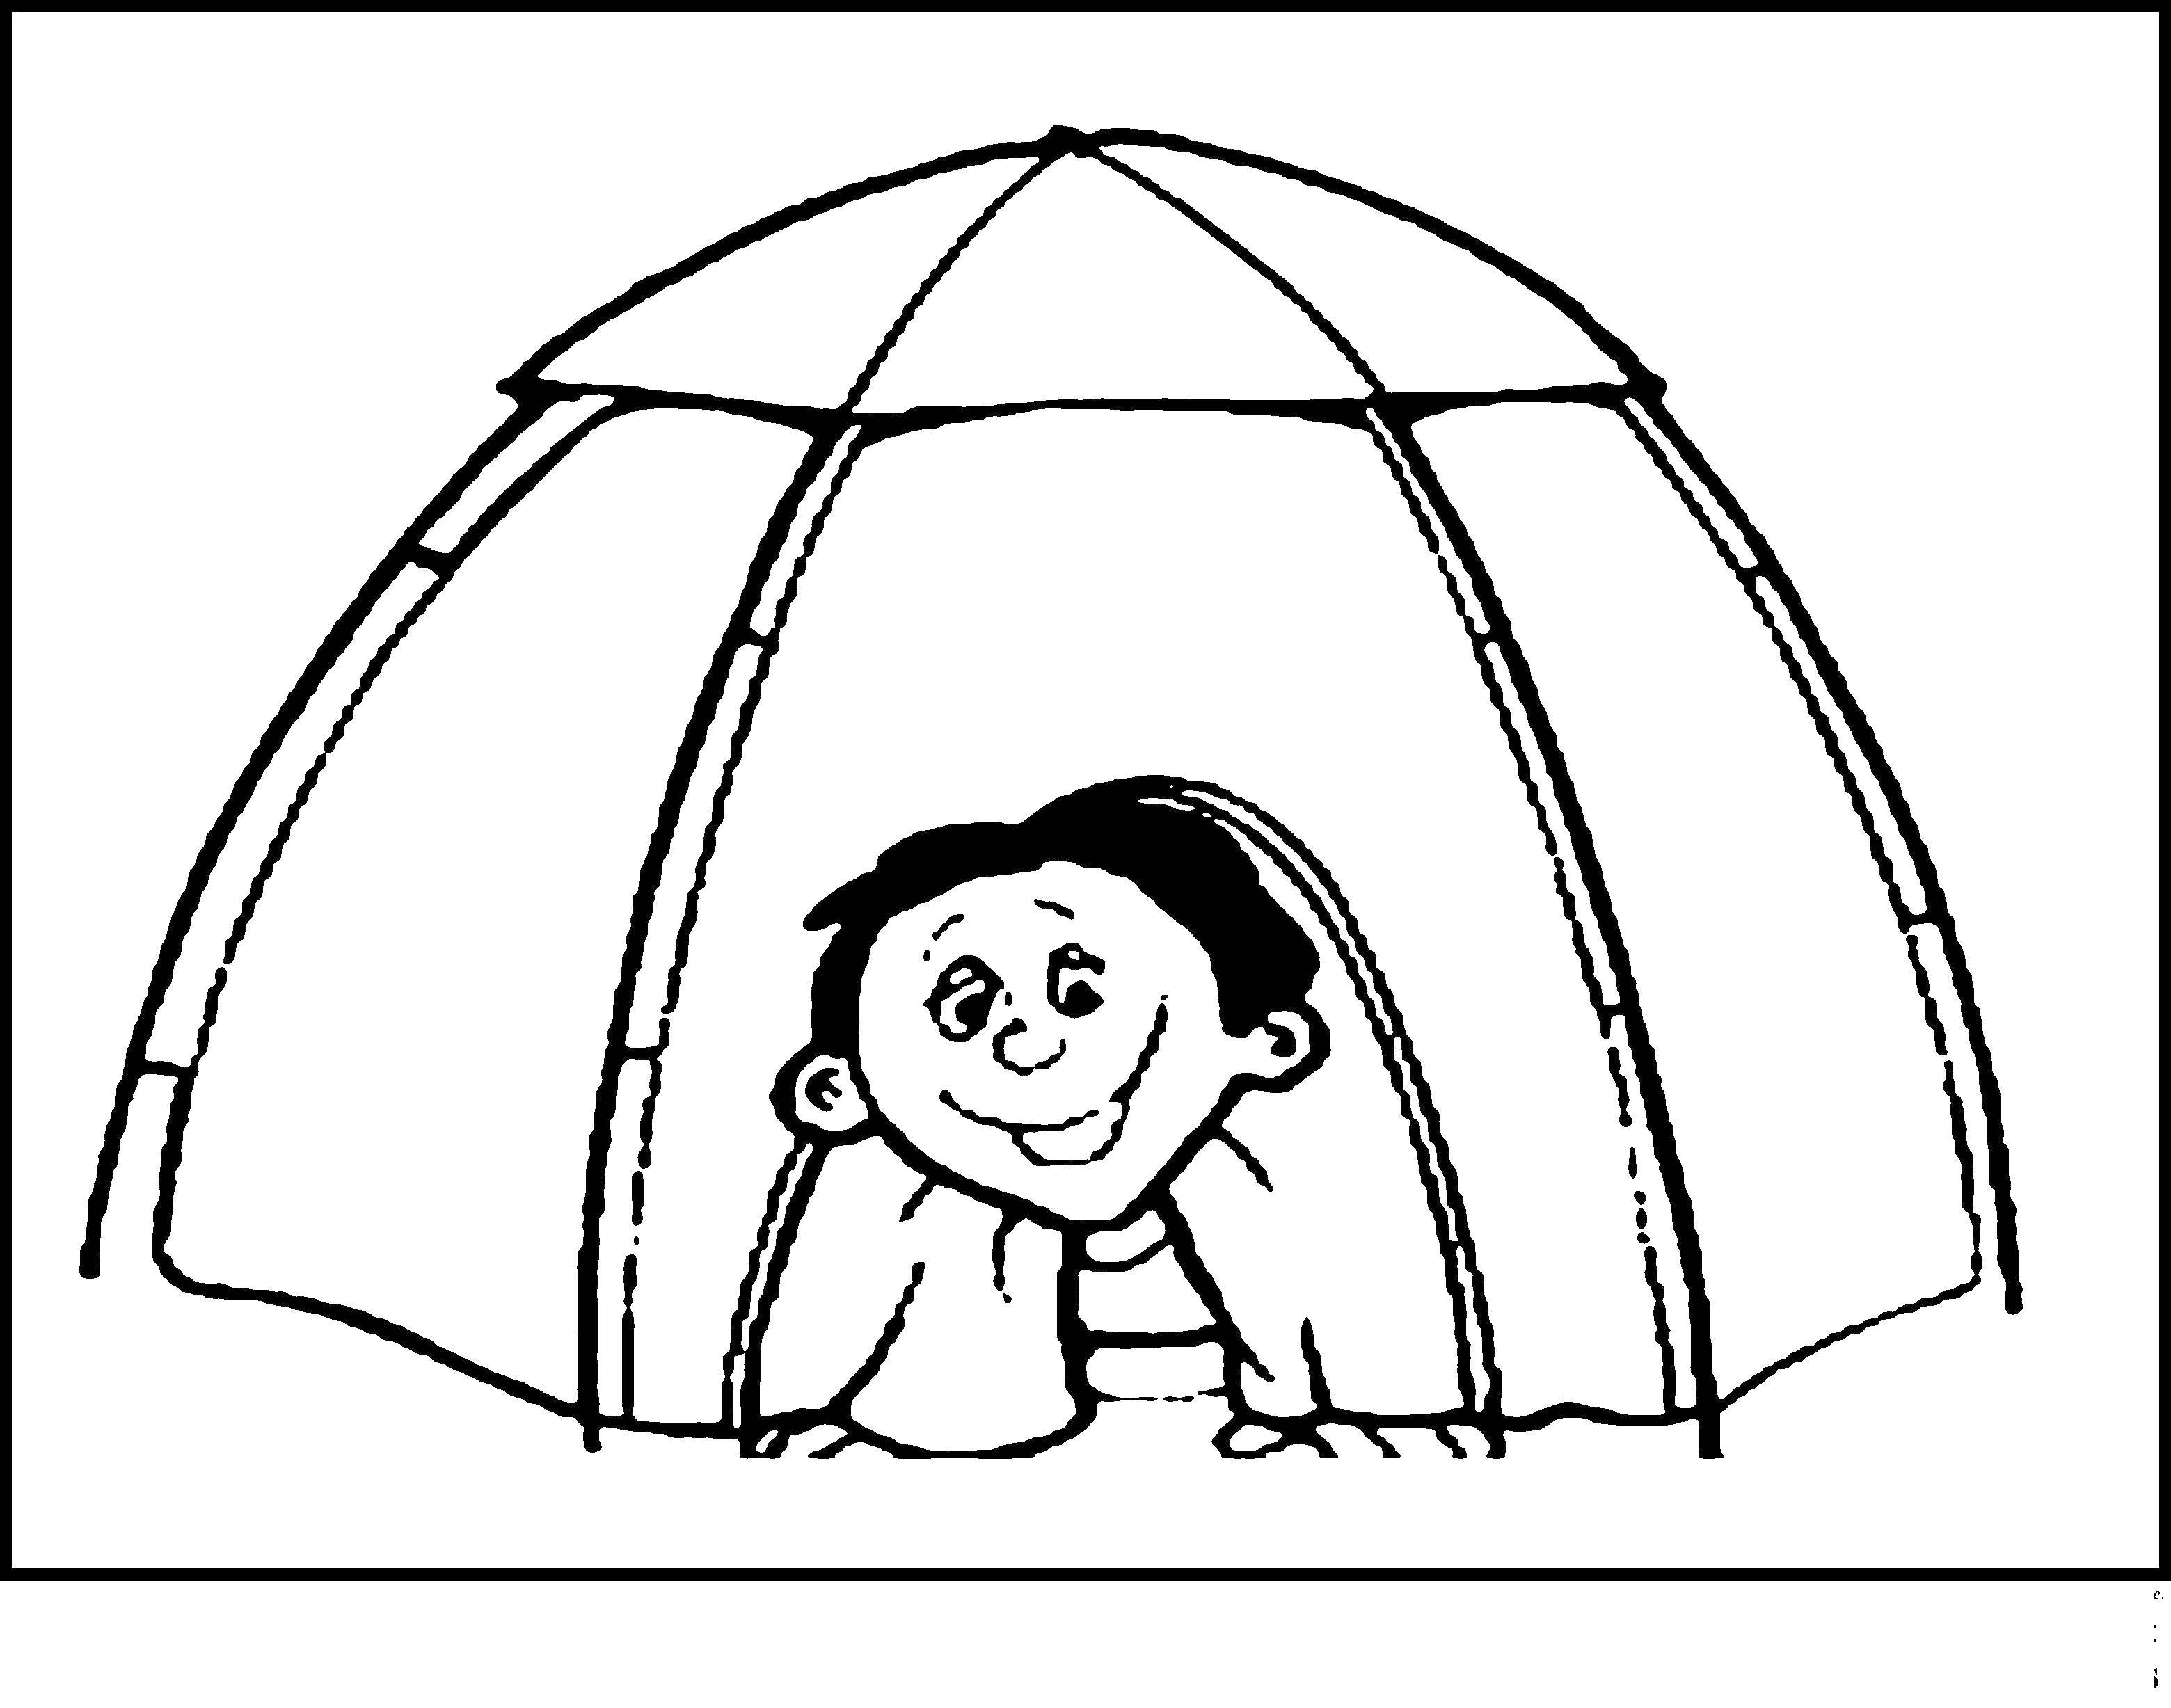 Название: Раскраска Палатка. Категория: Отдых на природе. Теги: Отдых, дети, палатка.